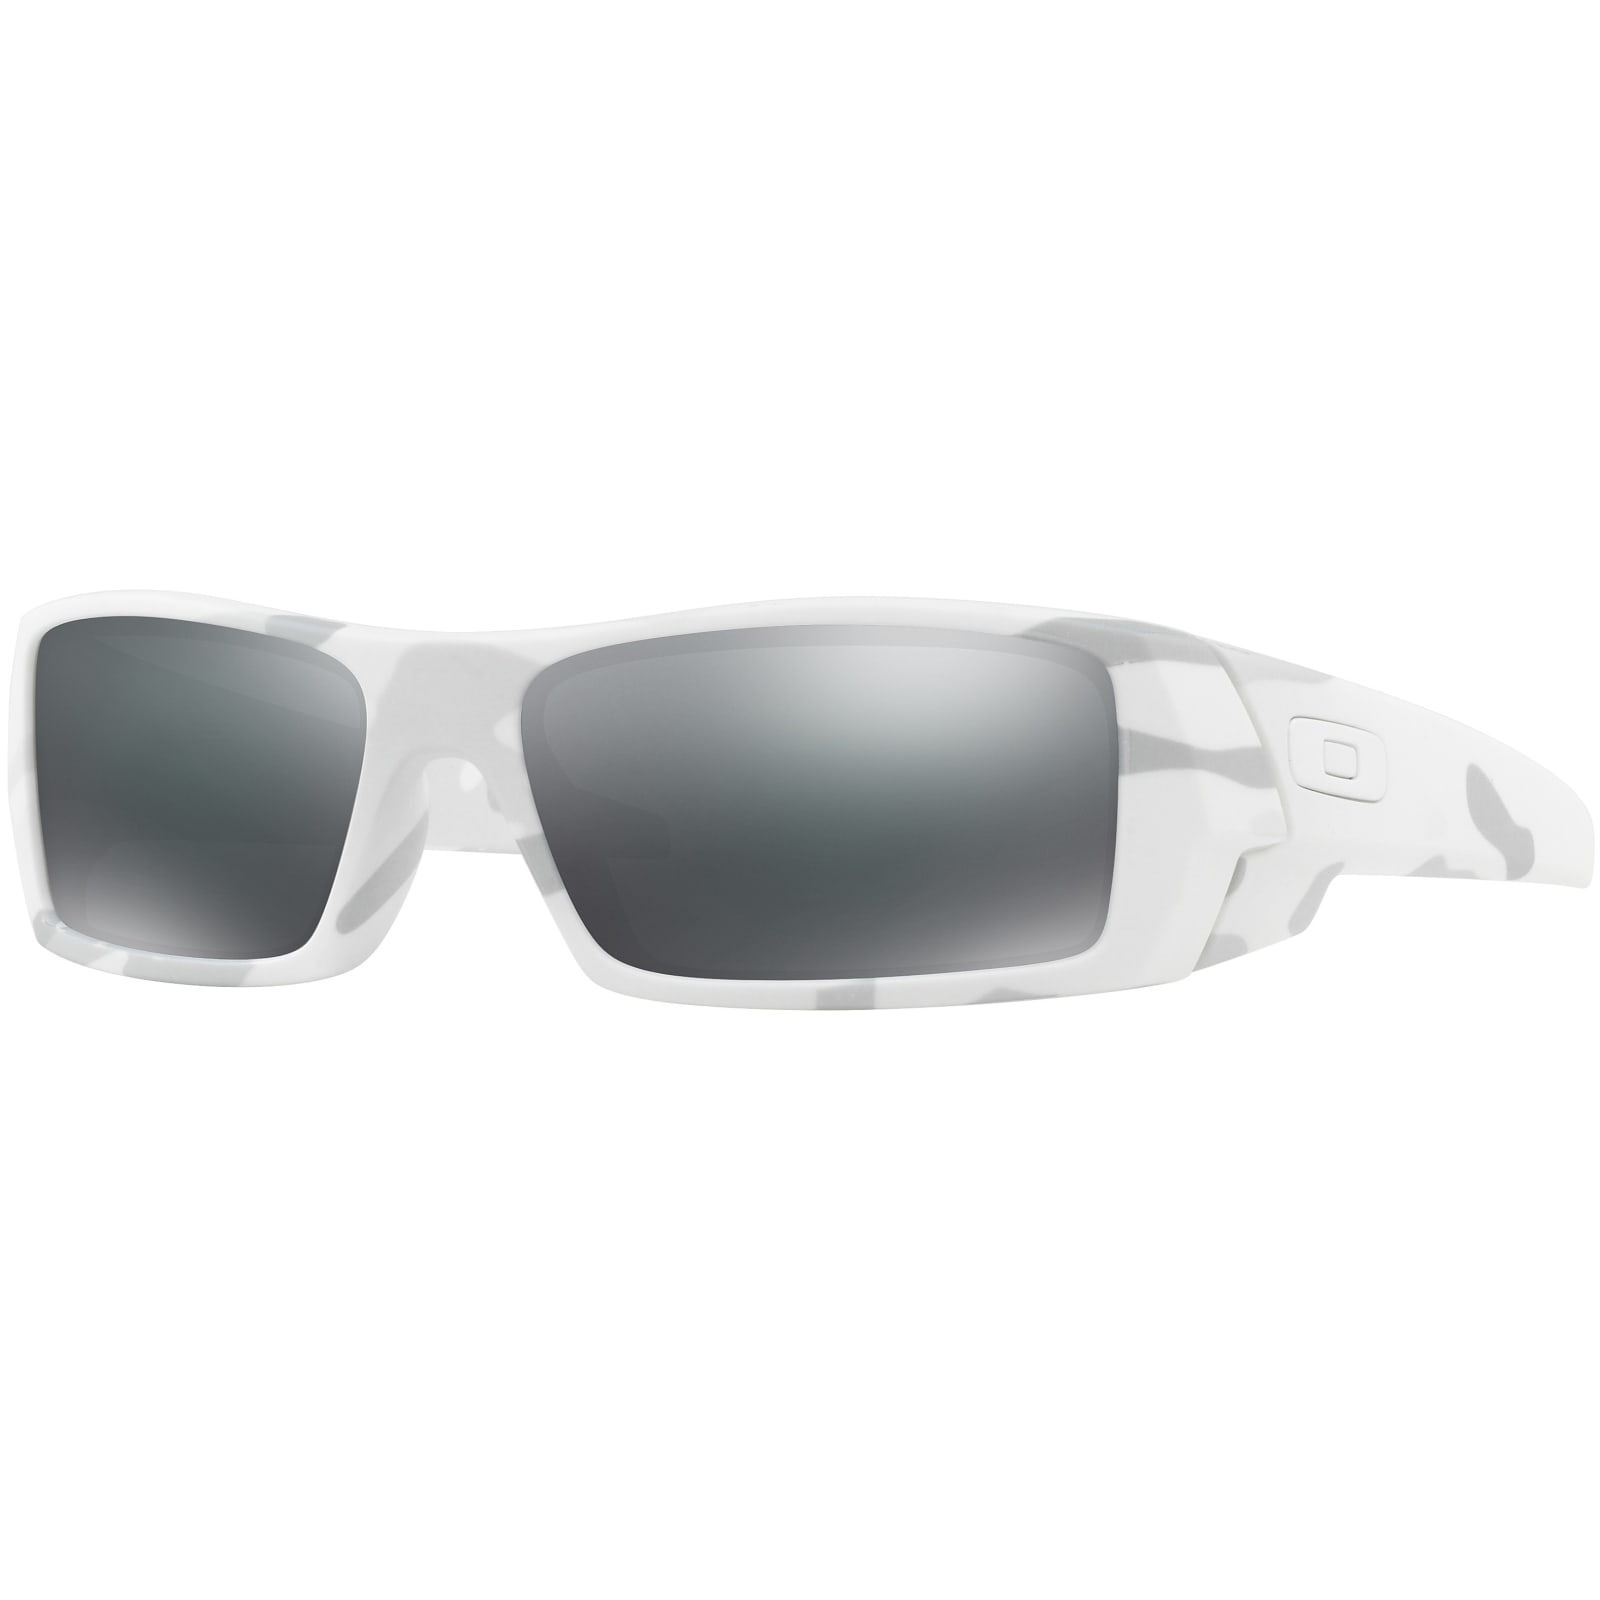 Unisex Adult Standard Issue Gascan Multicam Alpine w/ Black Iridium  Sunglasses by Oakley at Fleet Farm